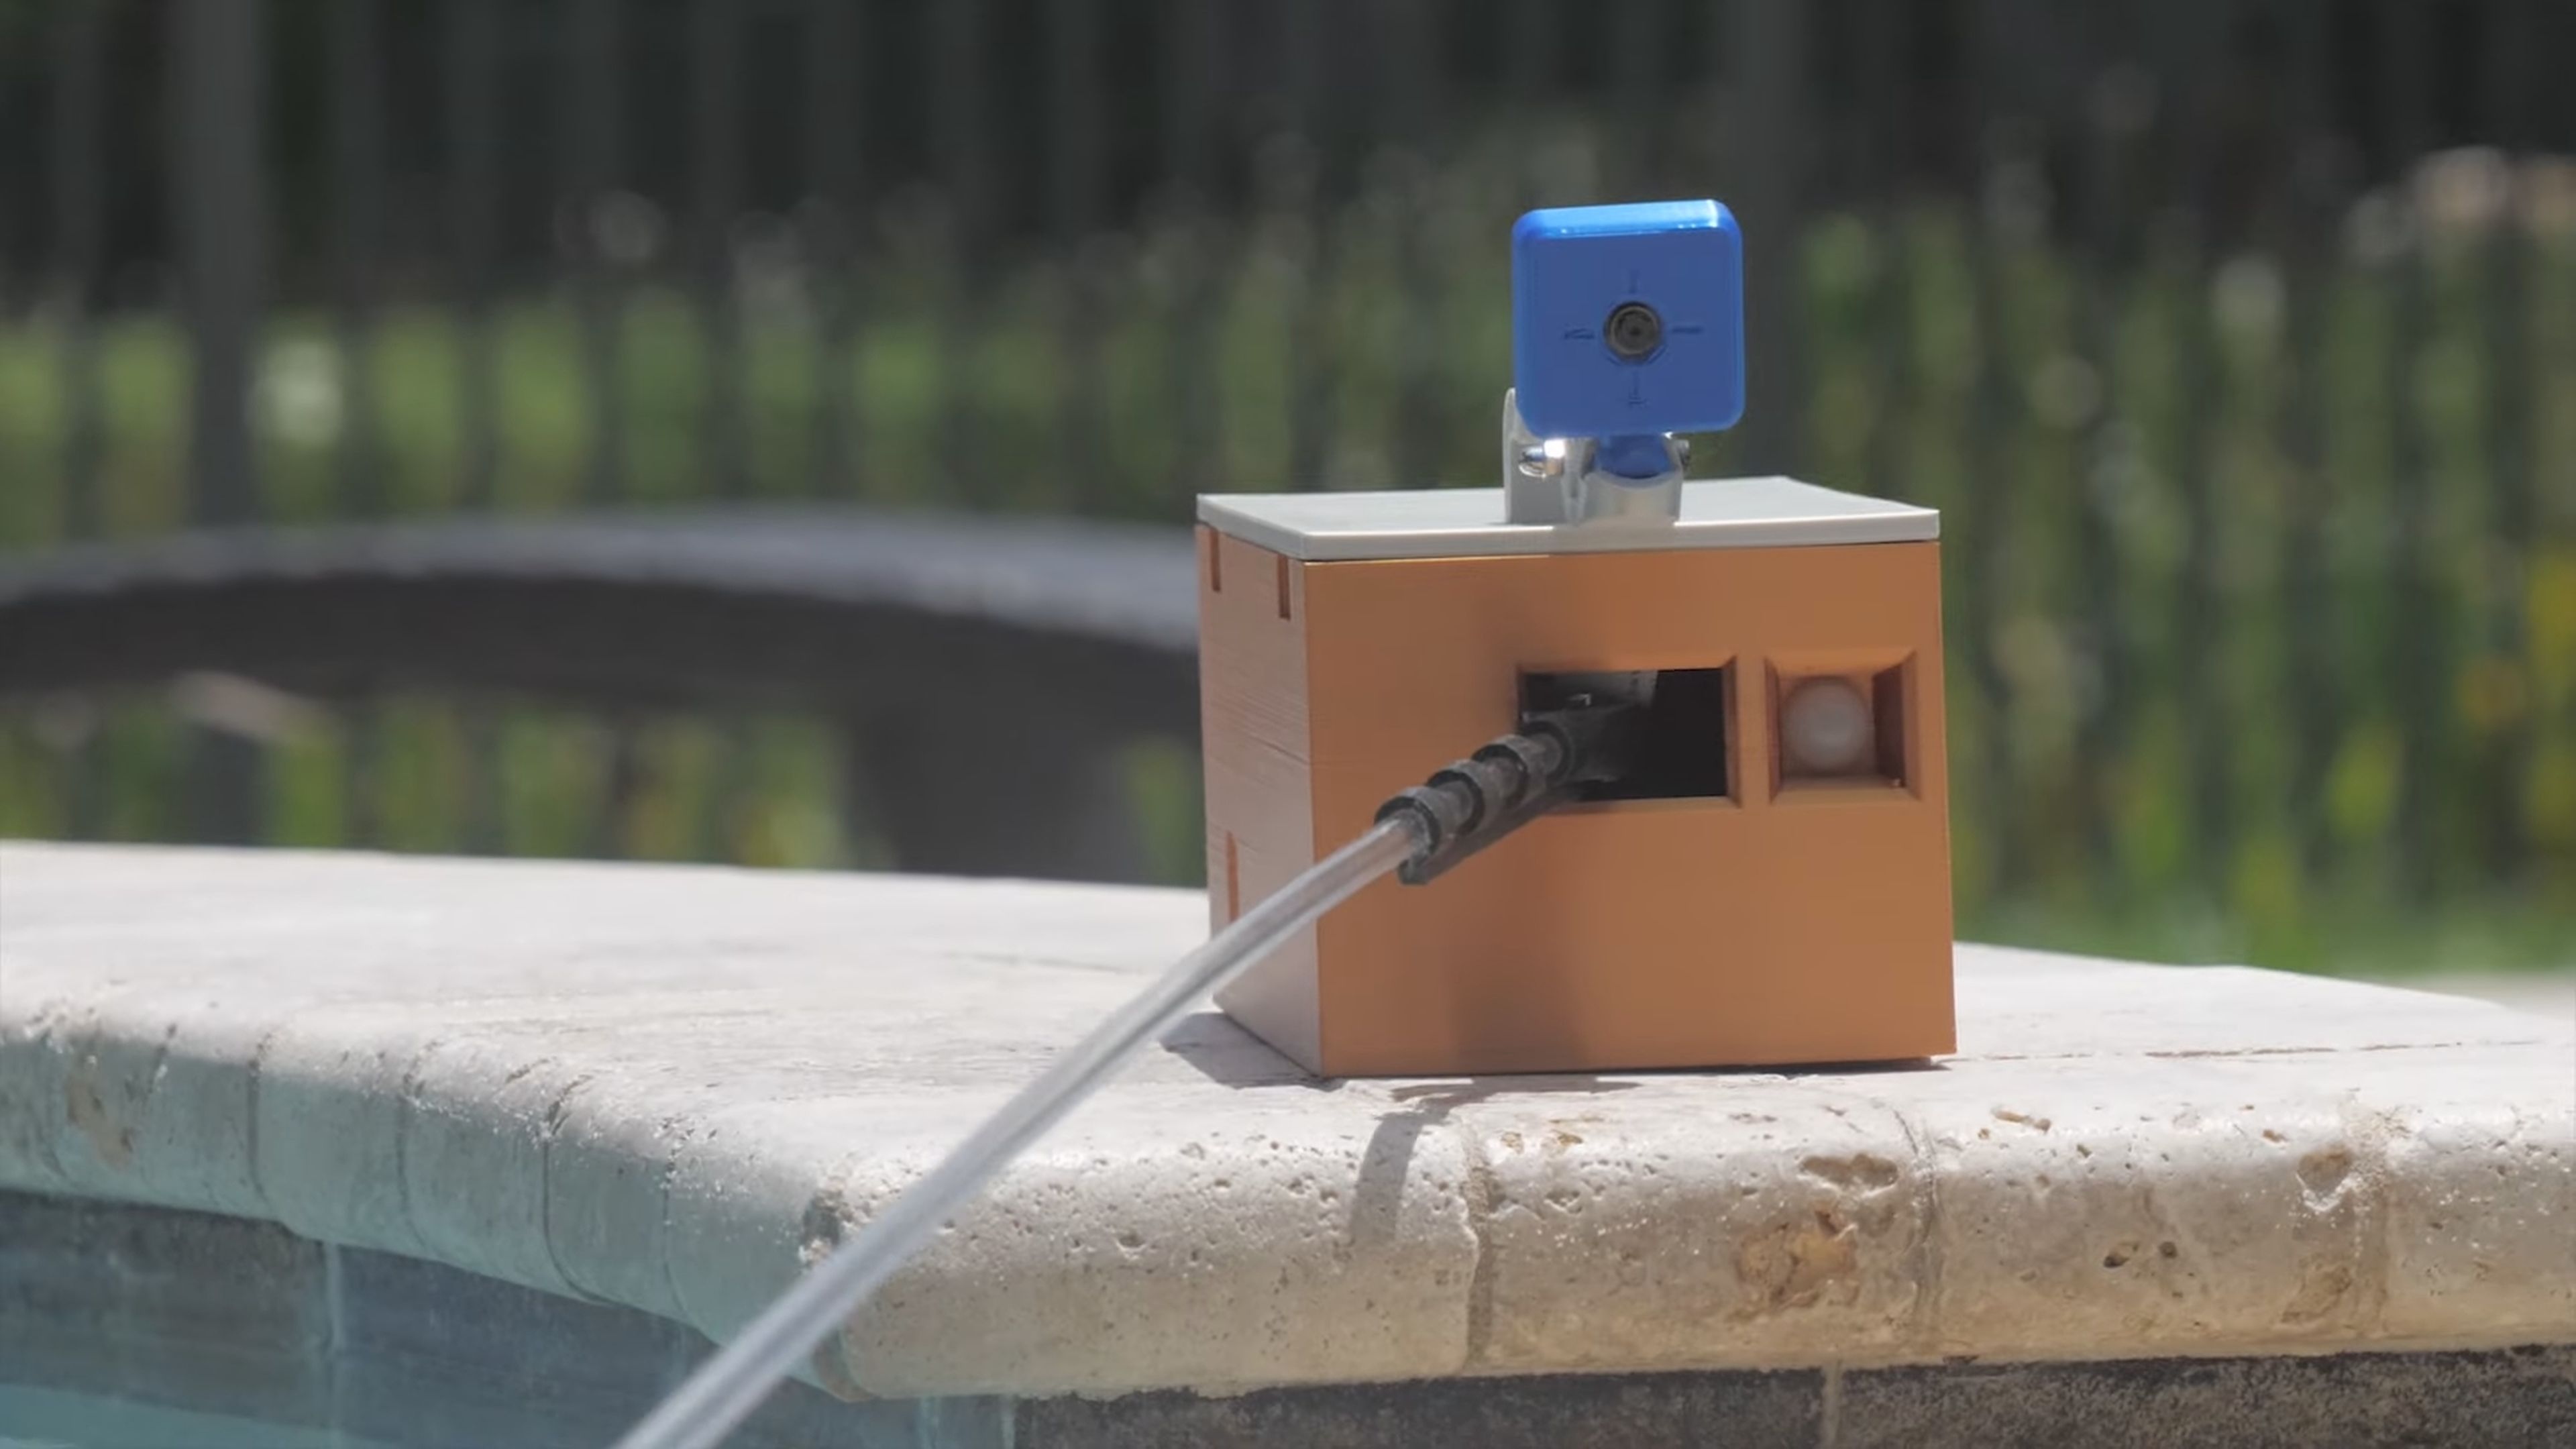 Este robot con Raspberry Pi espanta a los pájaros de la piscina lanzándoles un chorro de agua (vídeo)